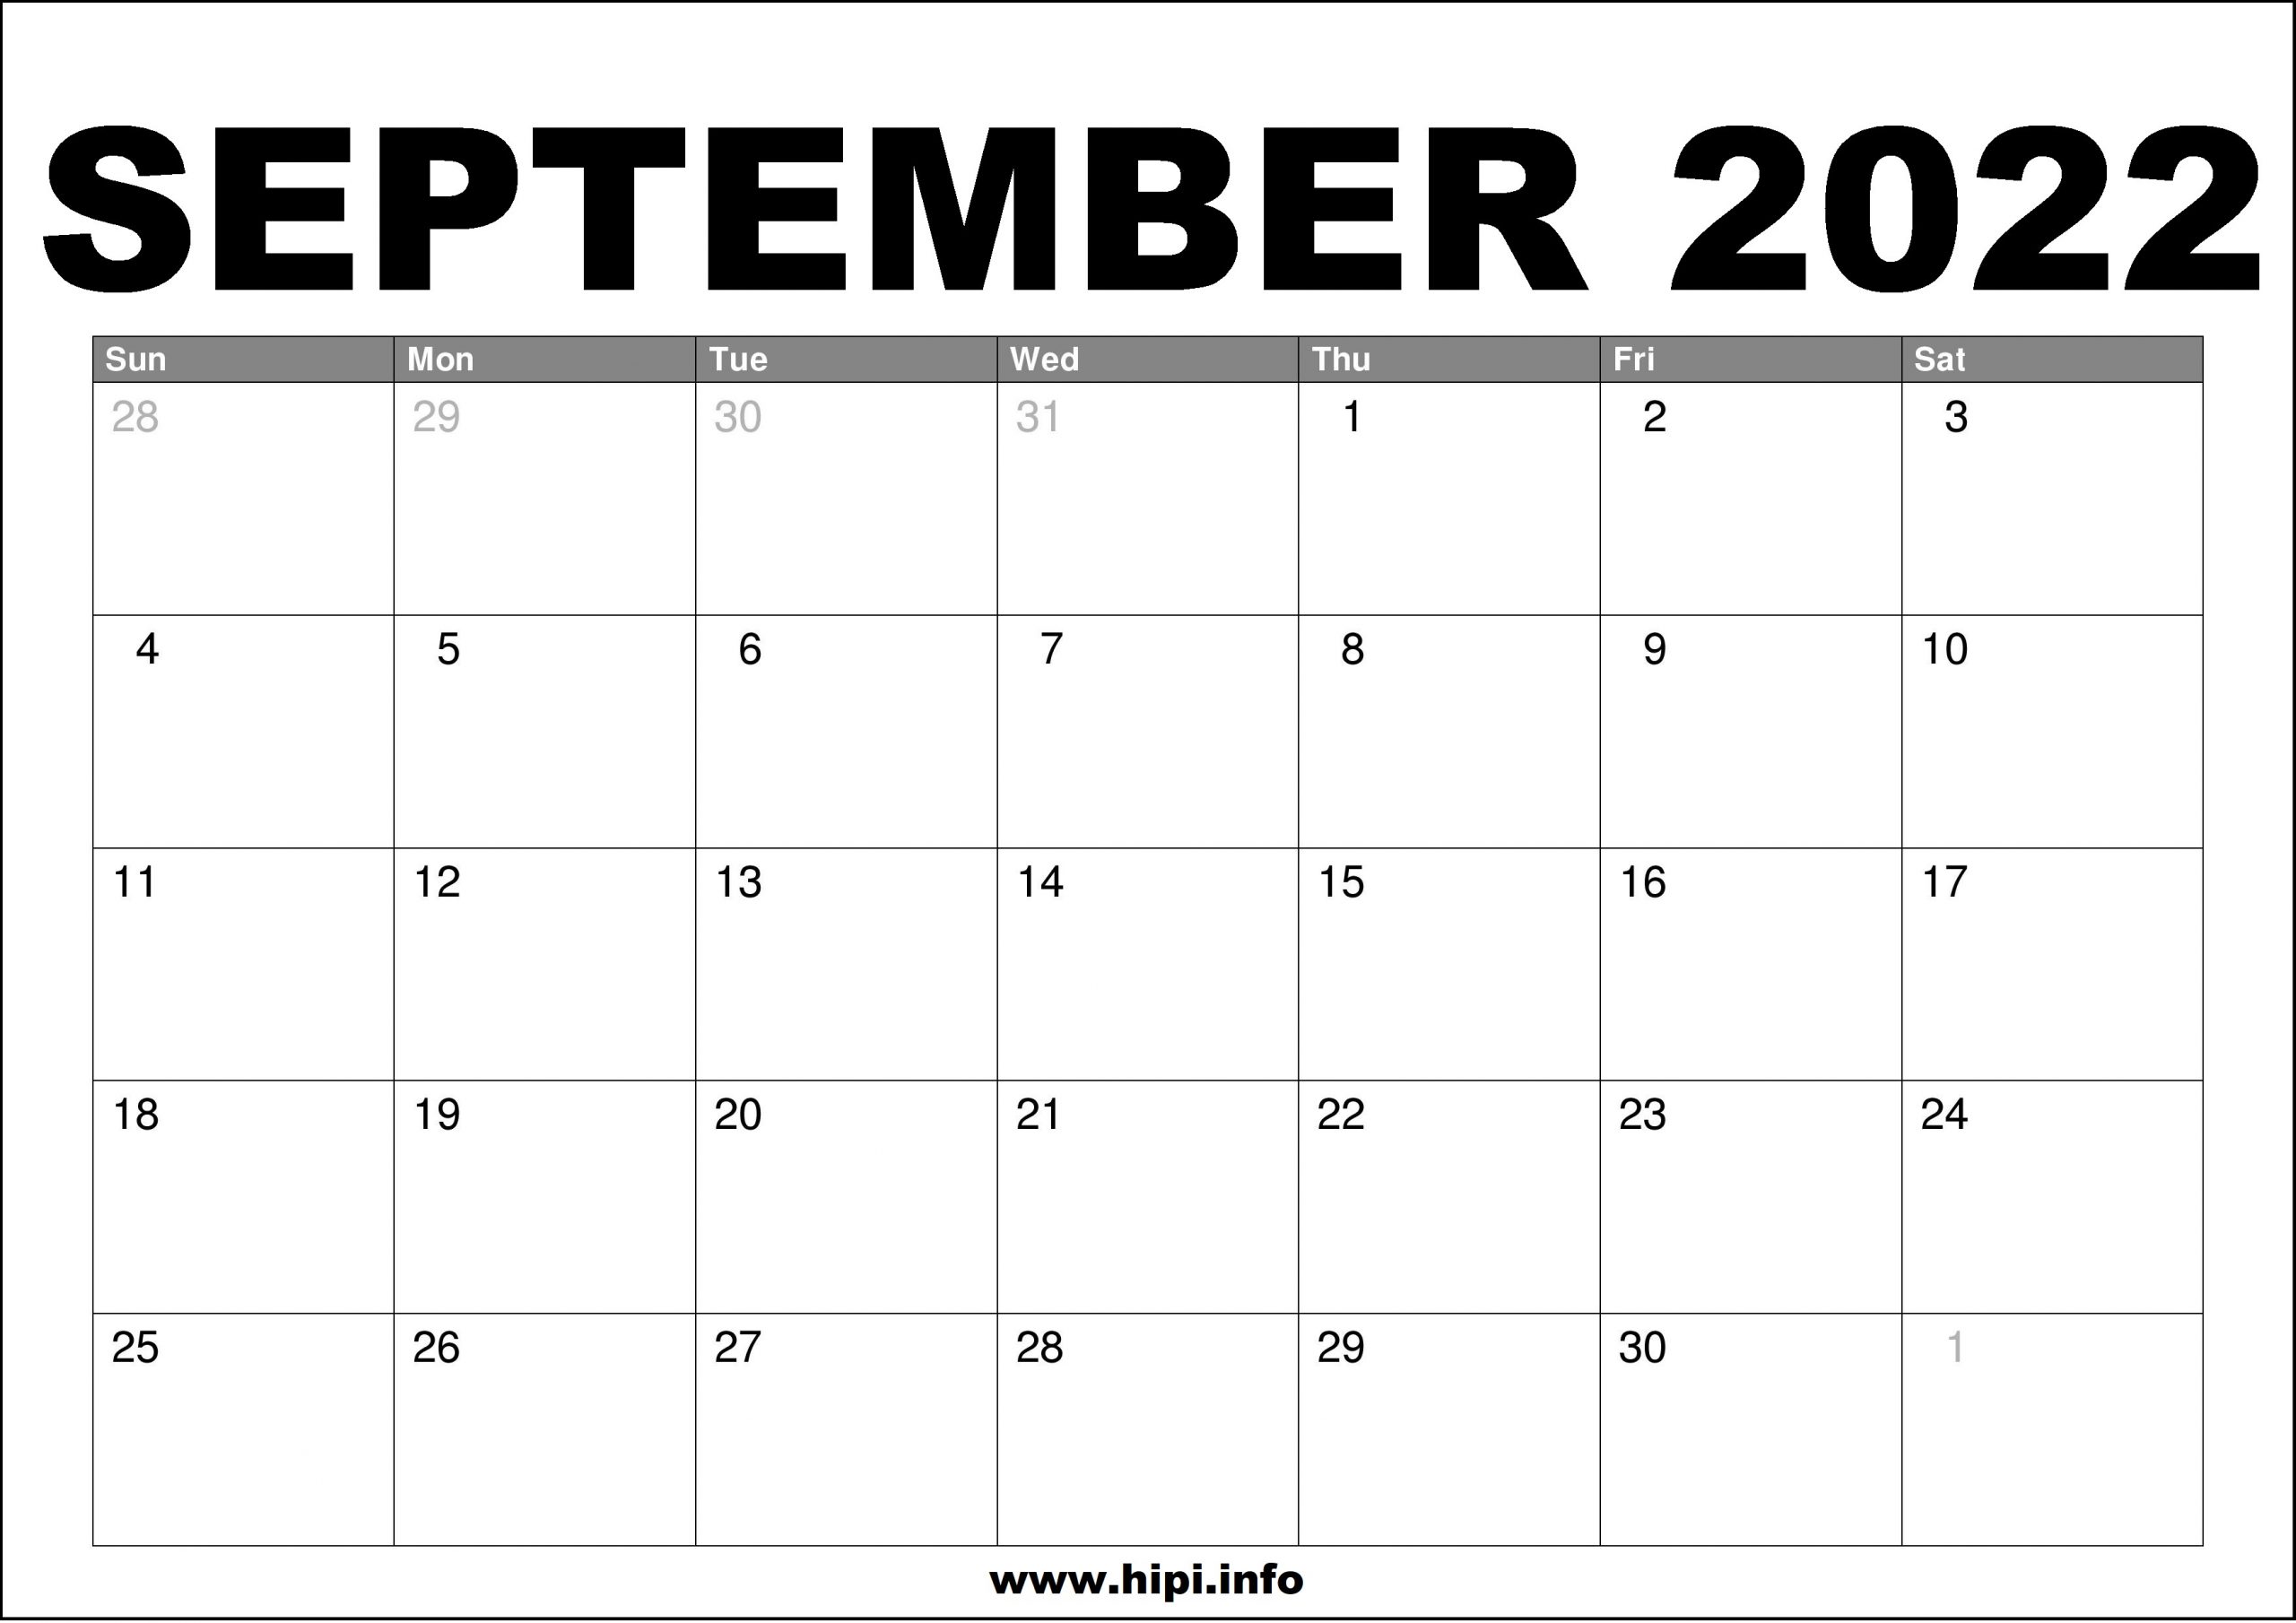 September 2022 Calendar Page September 2022 Calendar Printable Free - Hipi.info | Calendars Printable  Free